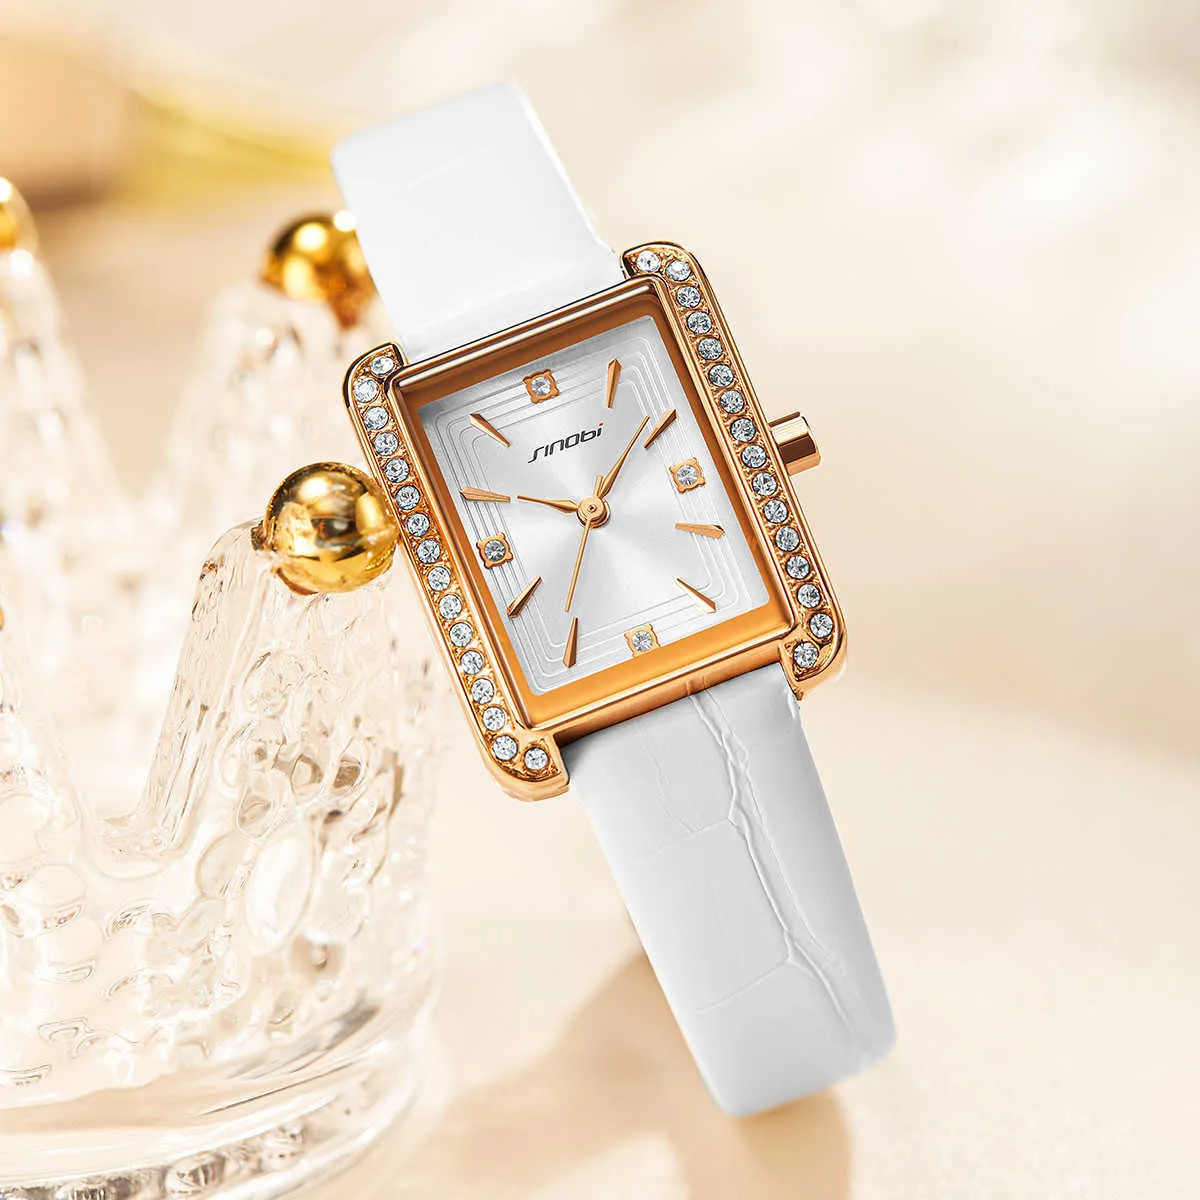 Sinobi 2021 Nova Chegada Luxo Relógios Mulheres Elegante Retângulo Diamante WaterWatch Relógio de Relógio Montre Femme Lover Presentes Q0524